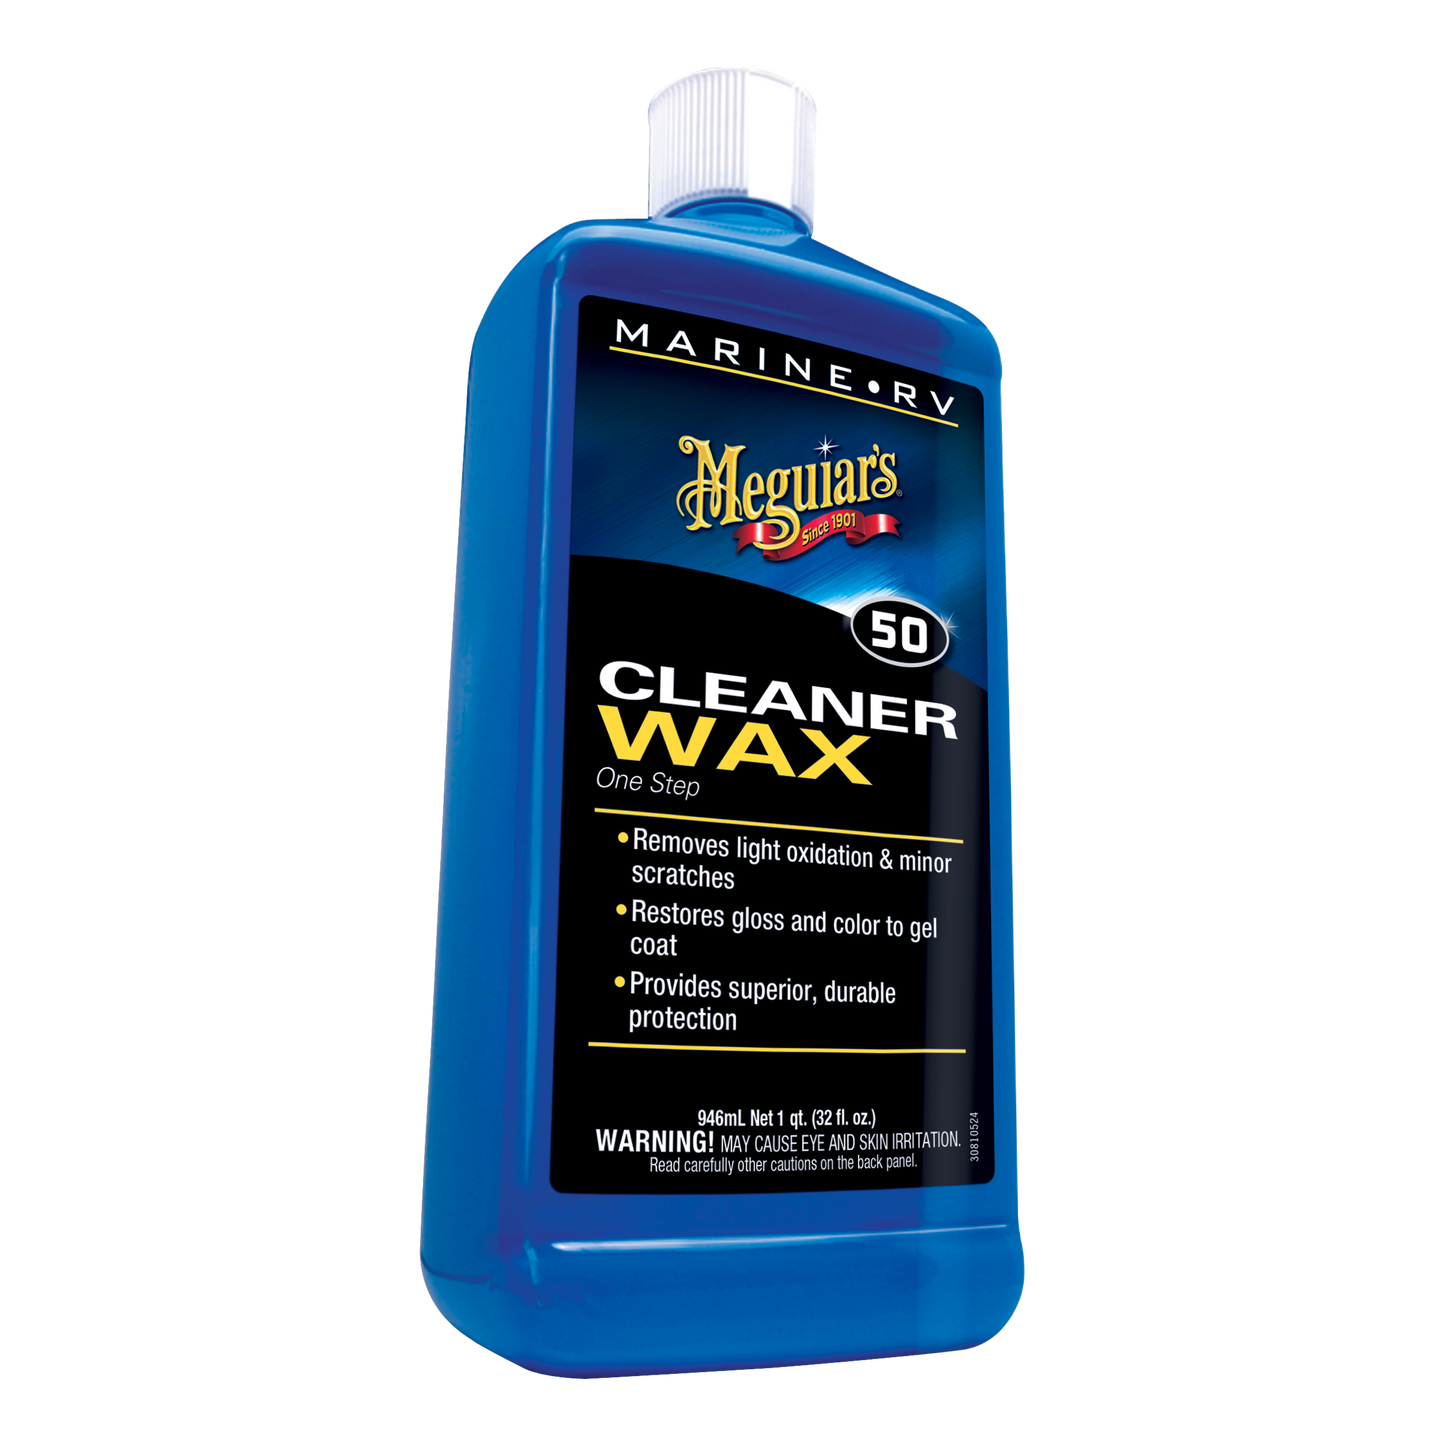 Meguiar's Marine/RV One Step Cleaner Wax